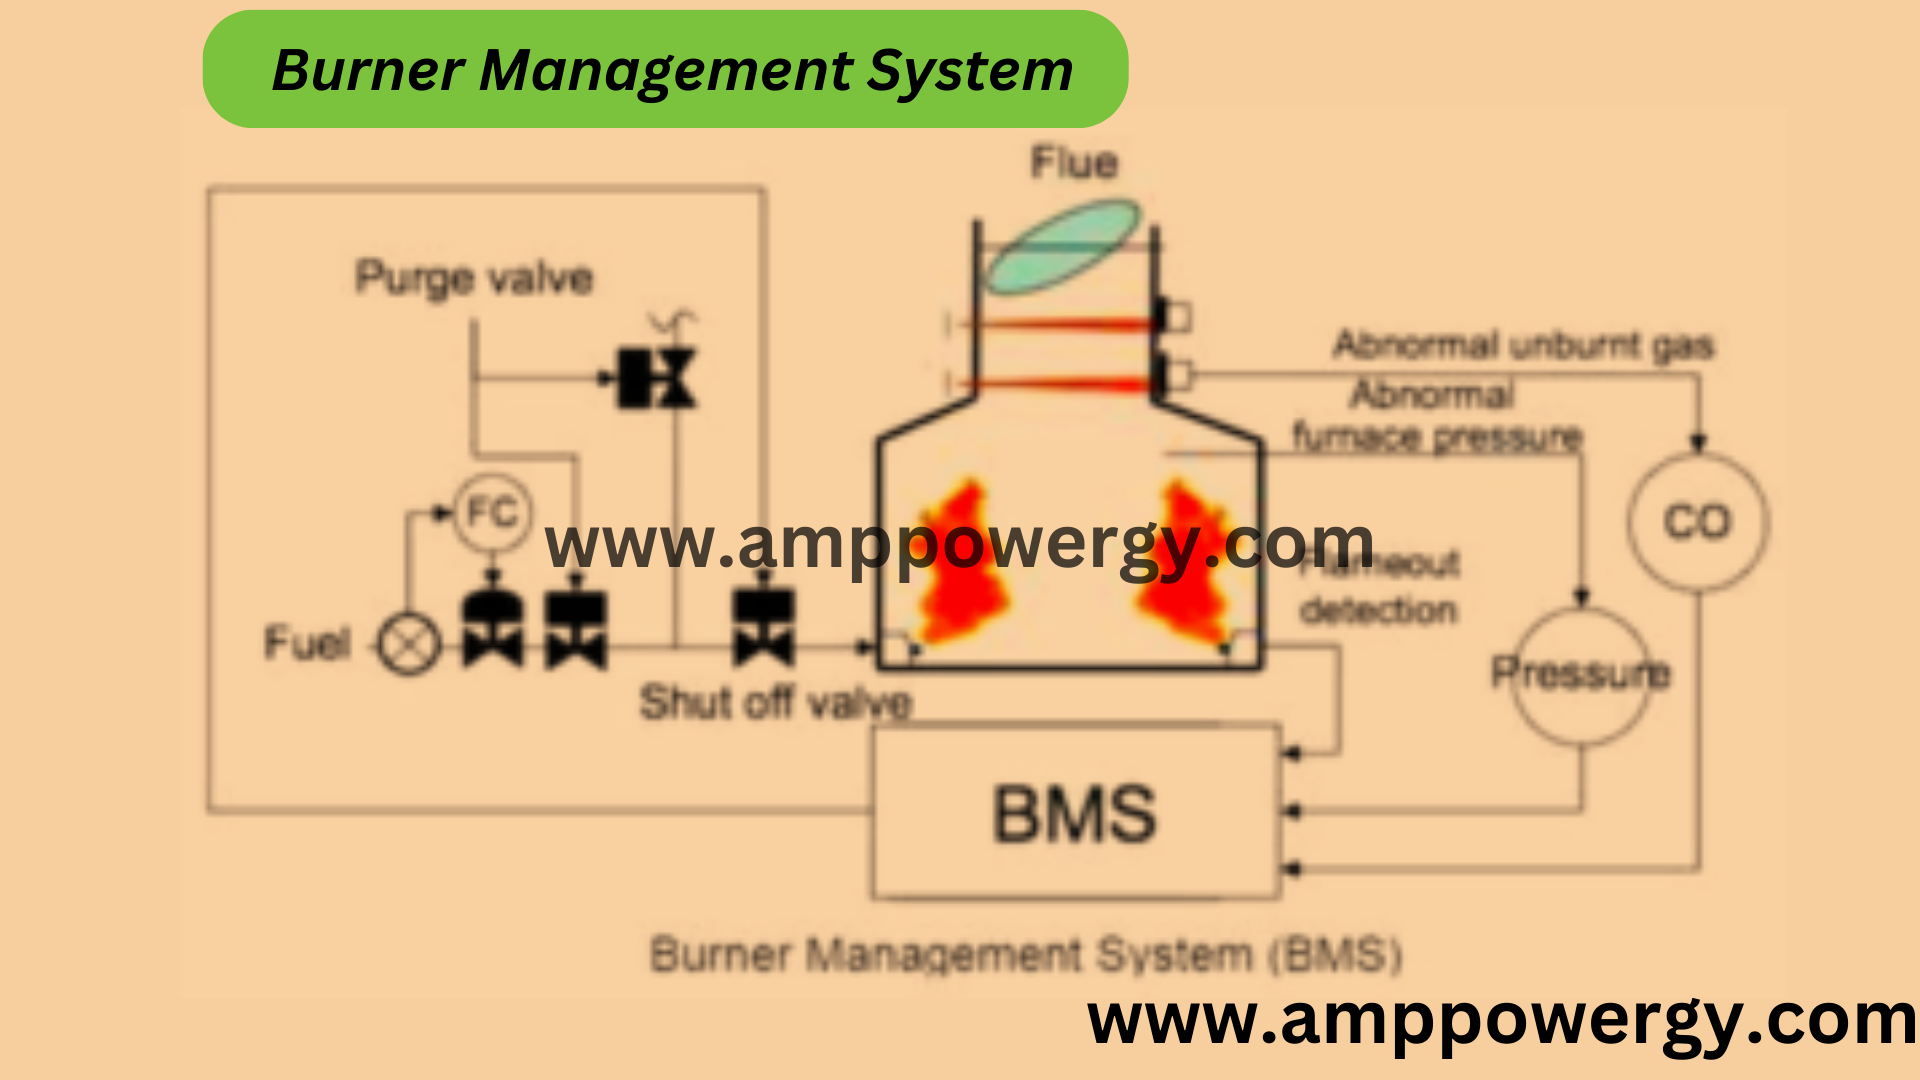 Burner management system (BMS), Functions, Types, Advantage and Disadvantage